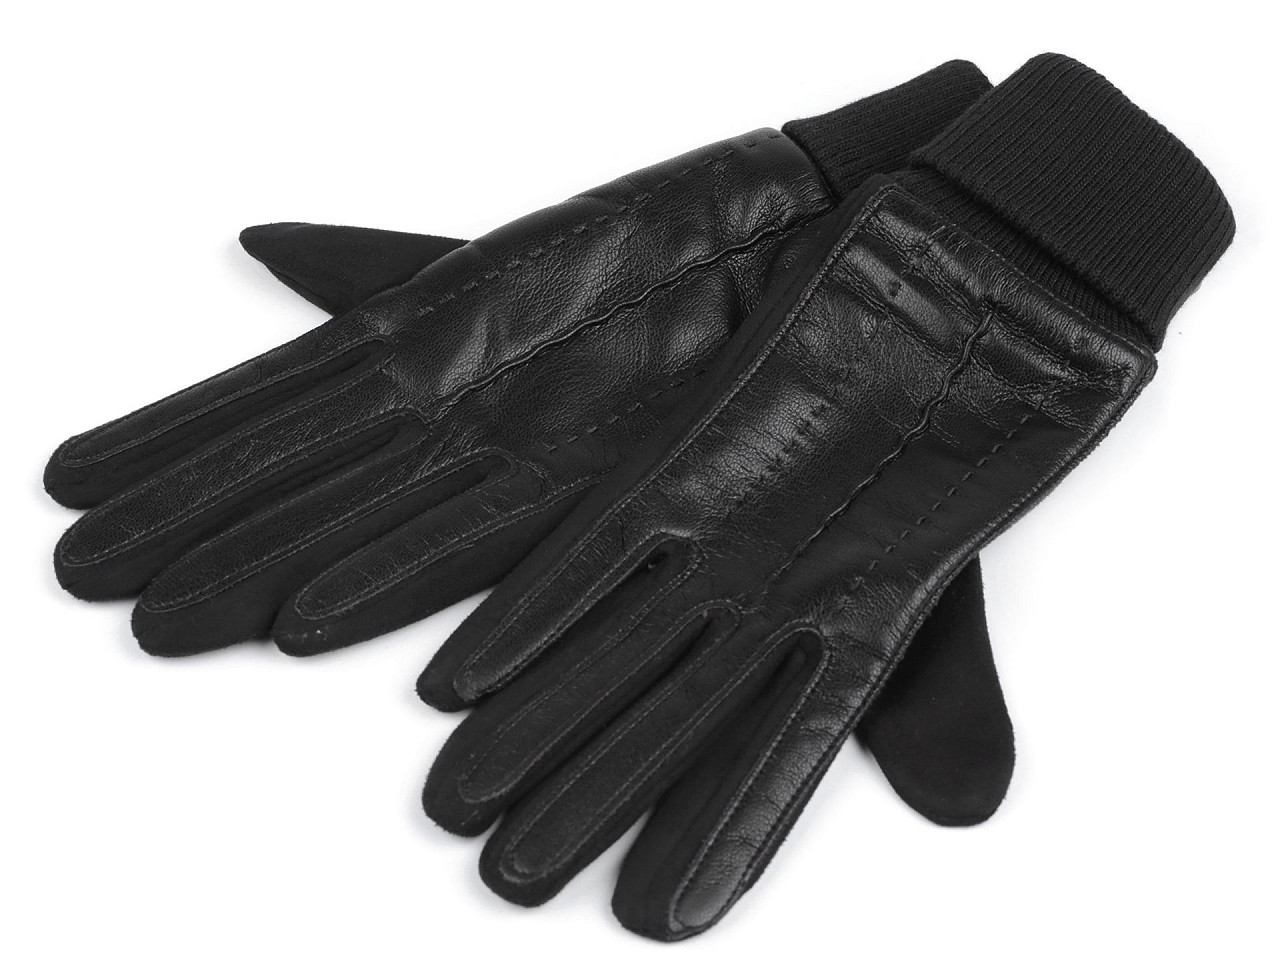 Damenhandschuhe mit Kunstlederbesatz, Touchscreen-fähig, schwarz, 1 Paar